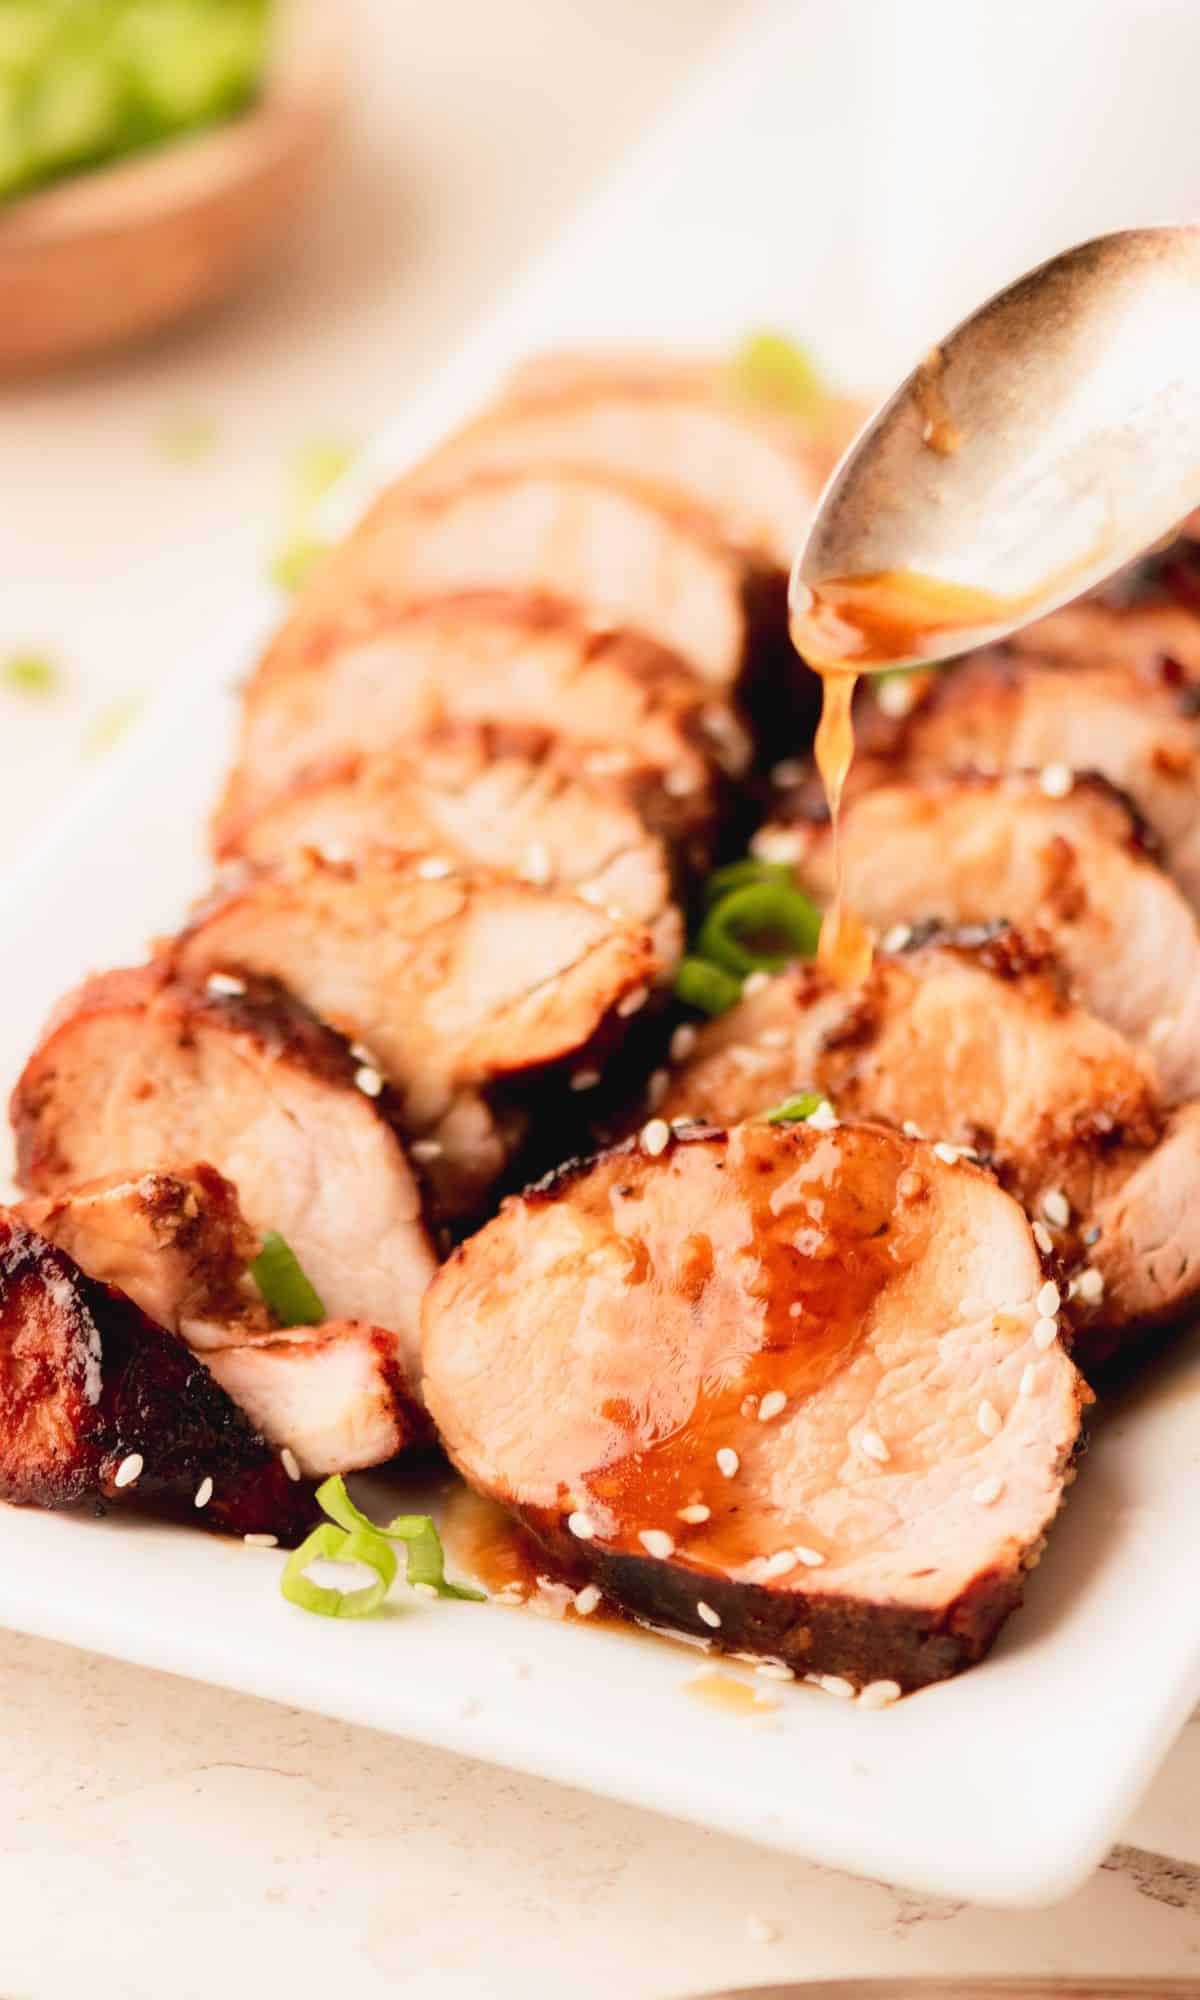 Honey garlic pork tenderloin garnished with sesame seeds on a white plate.